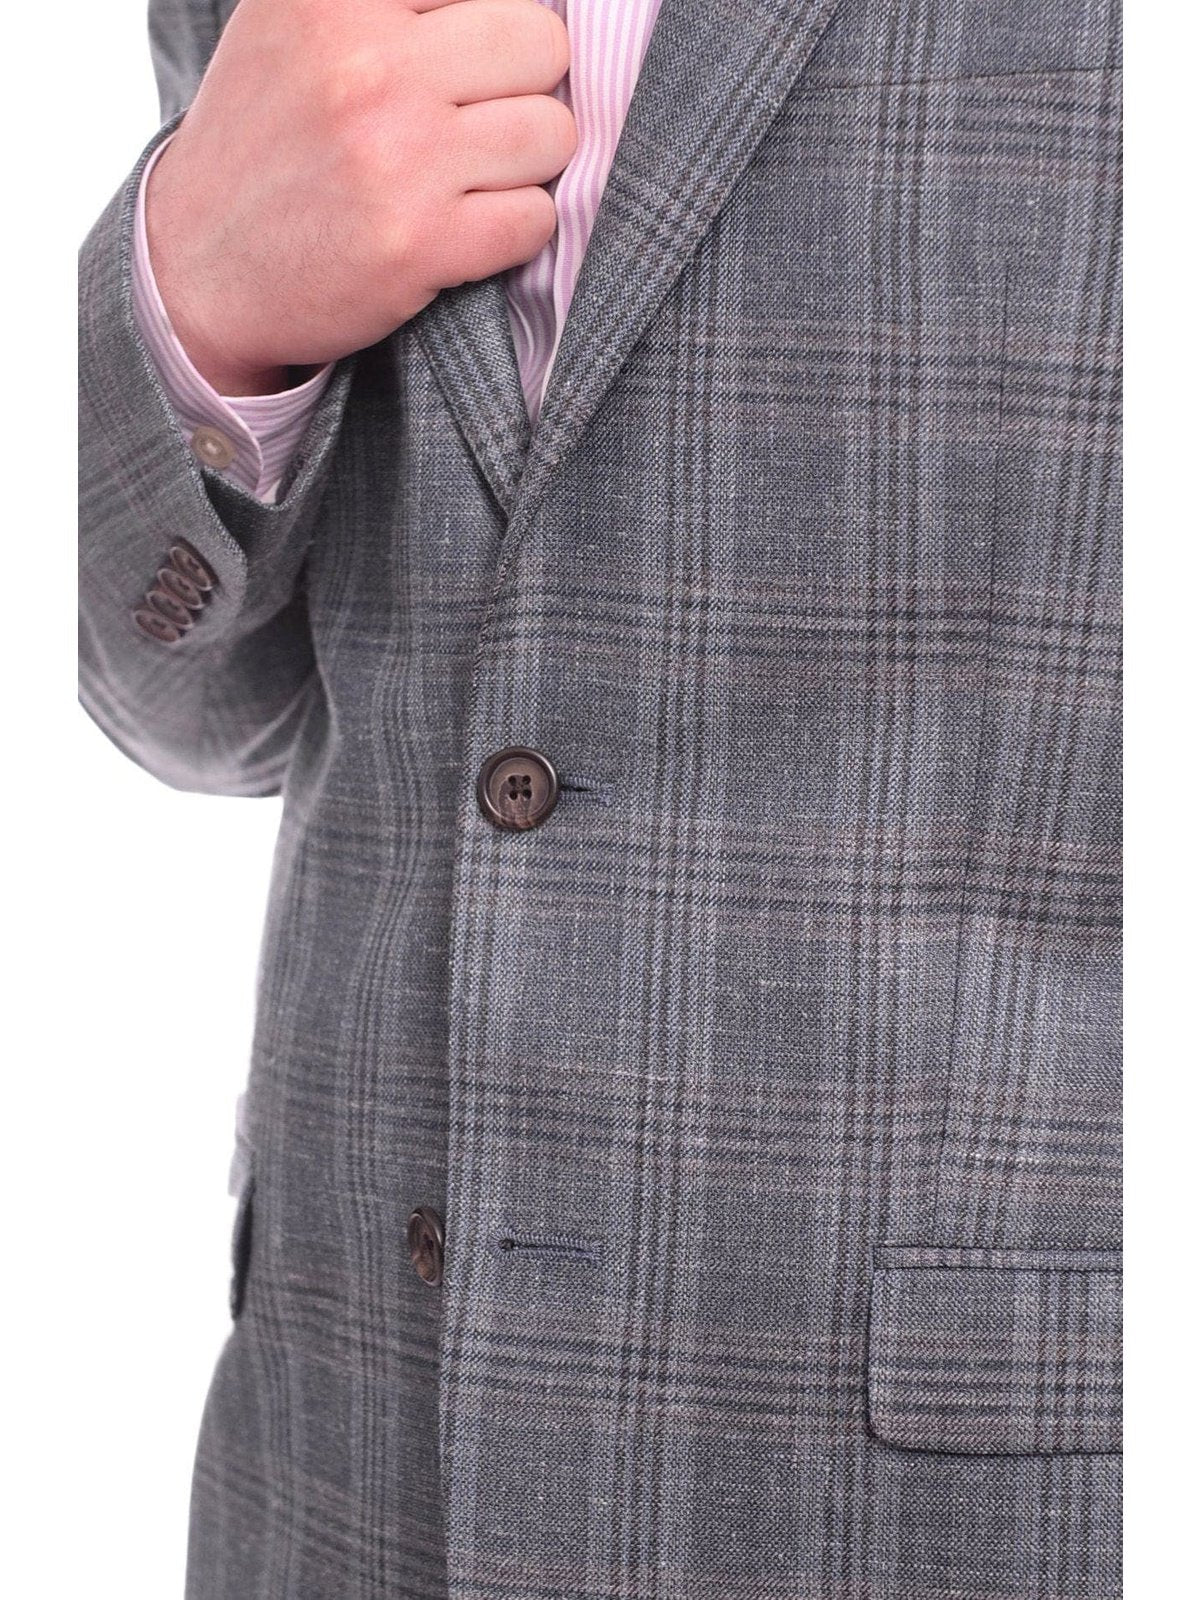 Ralph Lauren BLAZERS Ralph Lauren Blue Subtle Brown Plaid Wool Silk Linen Blend Blazer Sportcoat